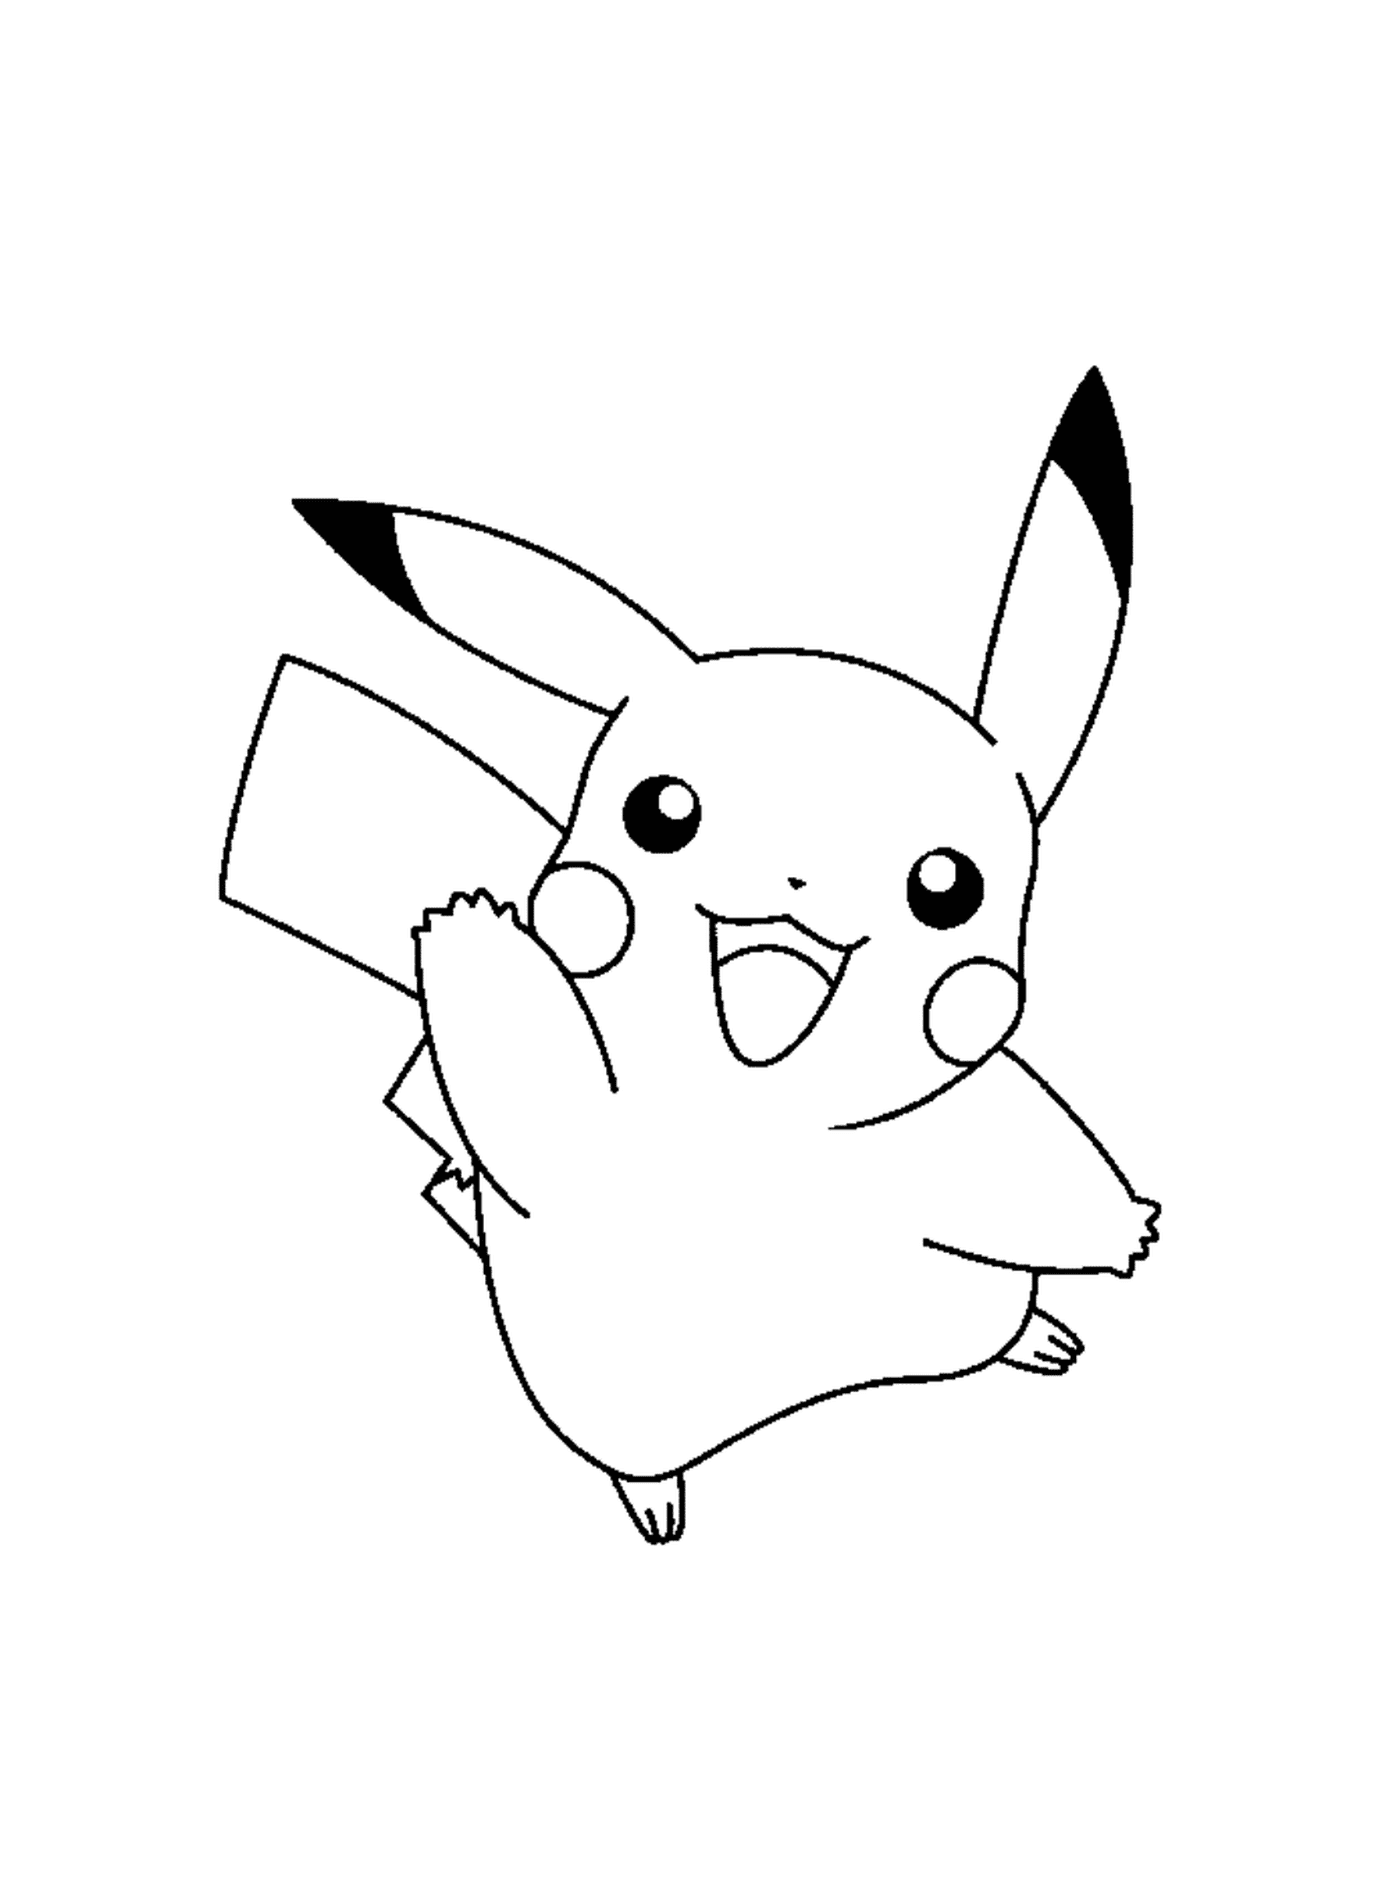  Felice ed energico Pikachu 